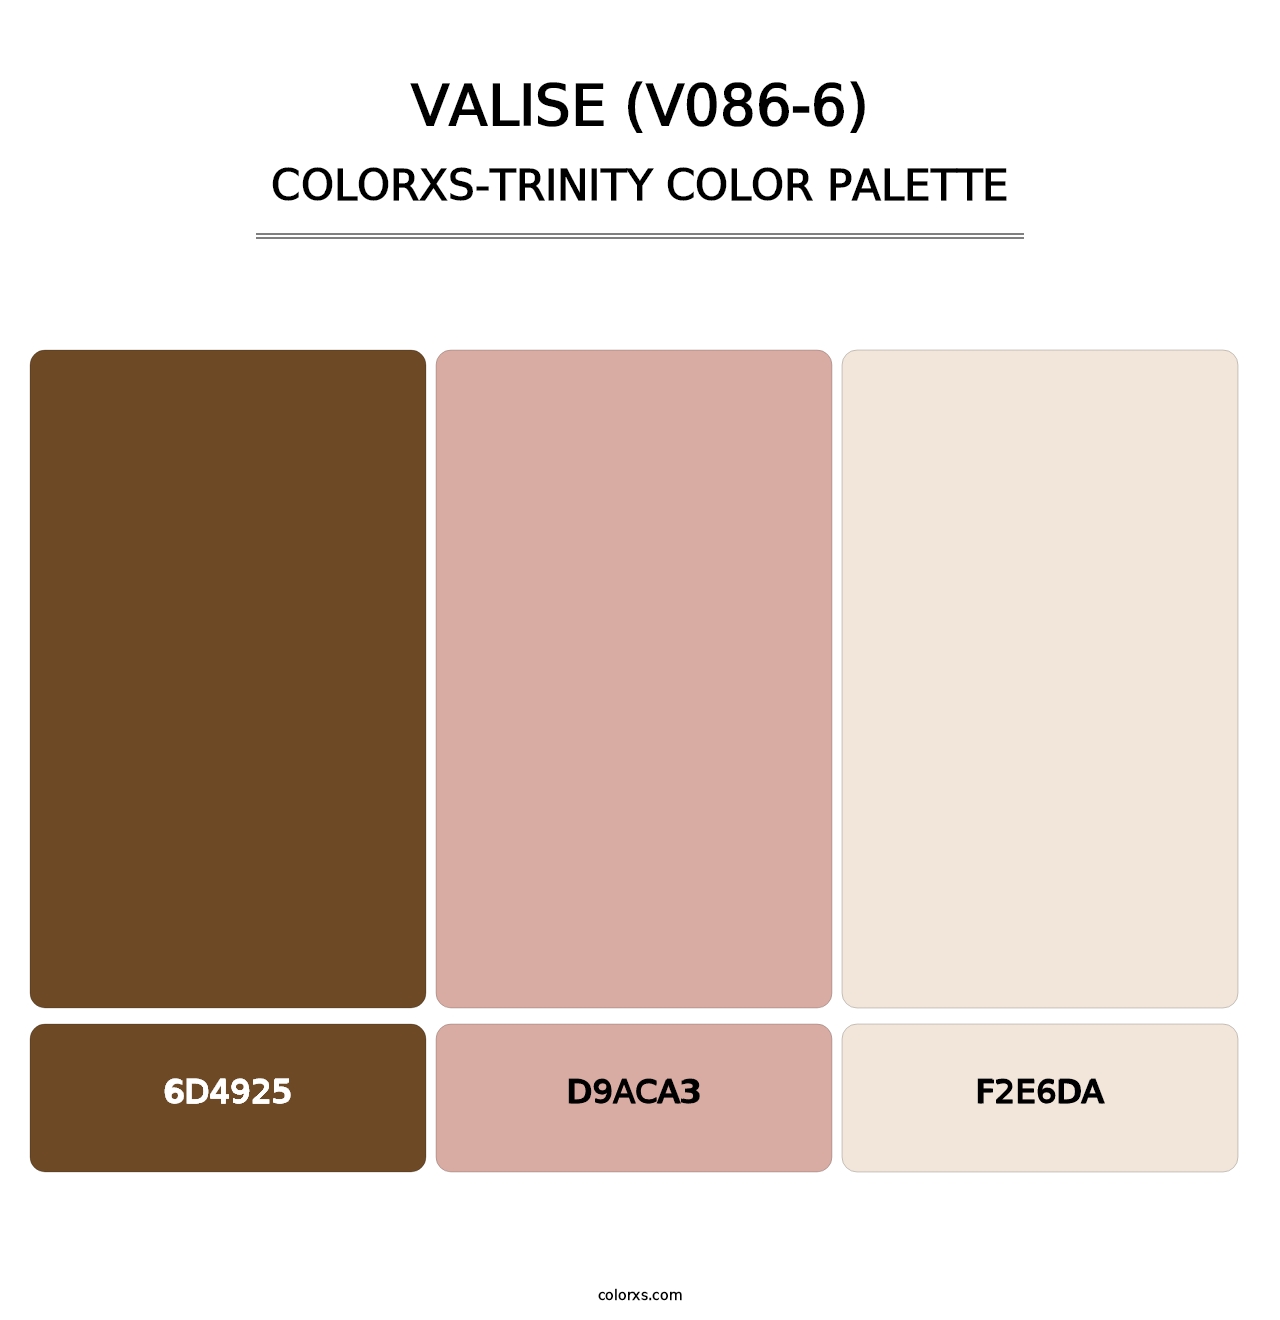 Valise (V086-6) - Colorxs Trinity Palette